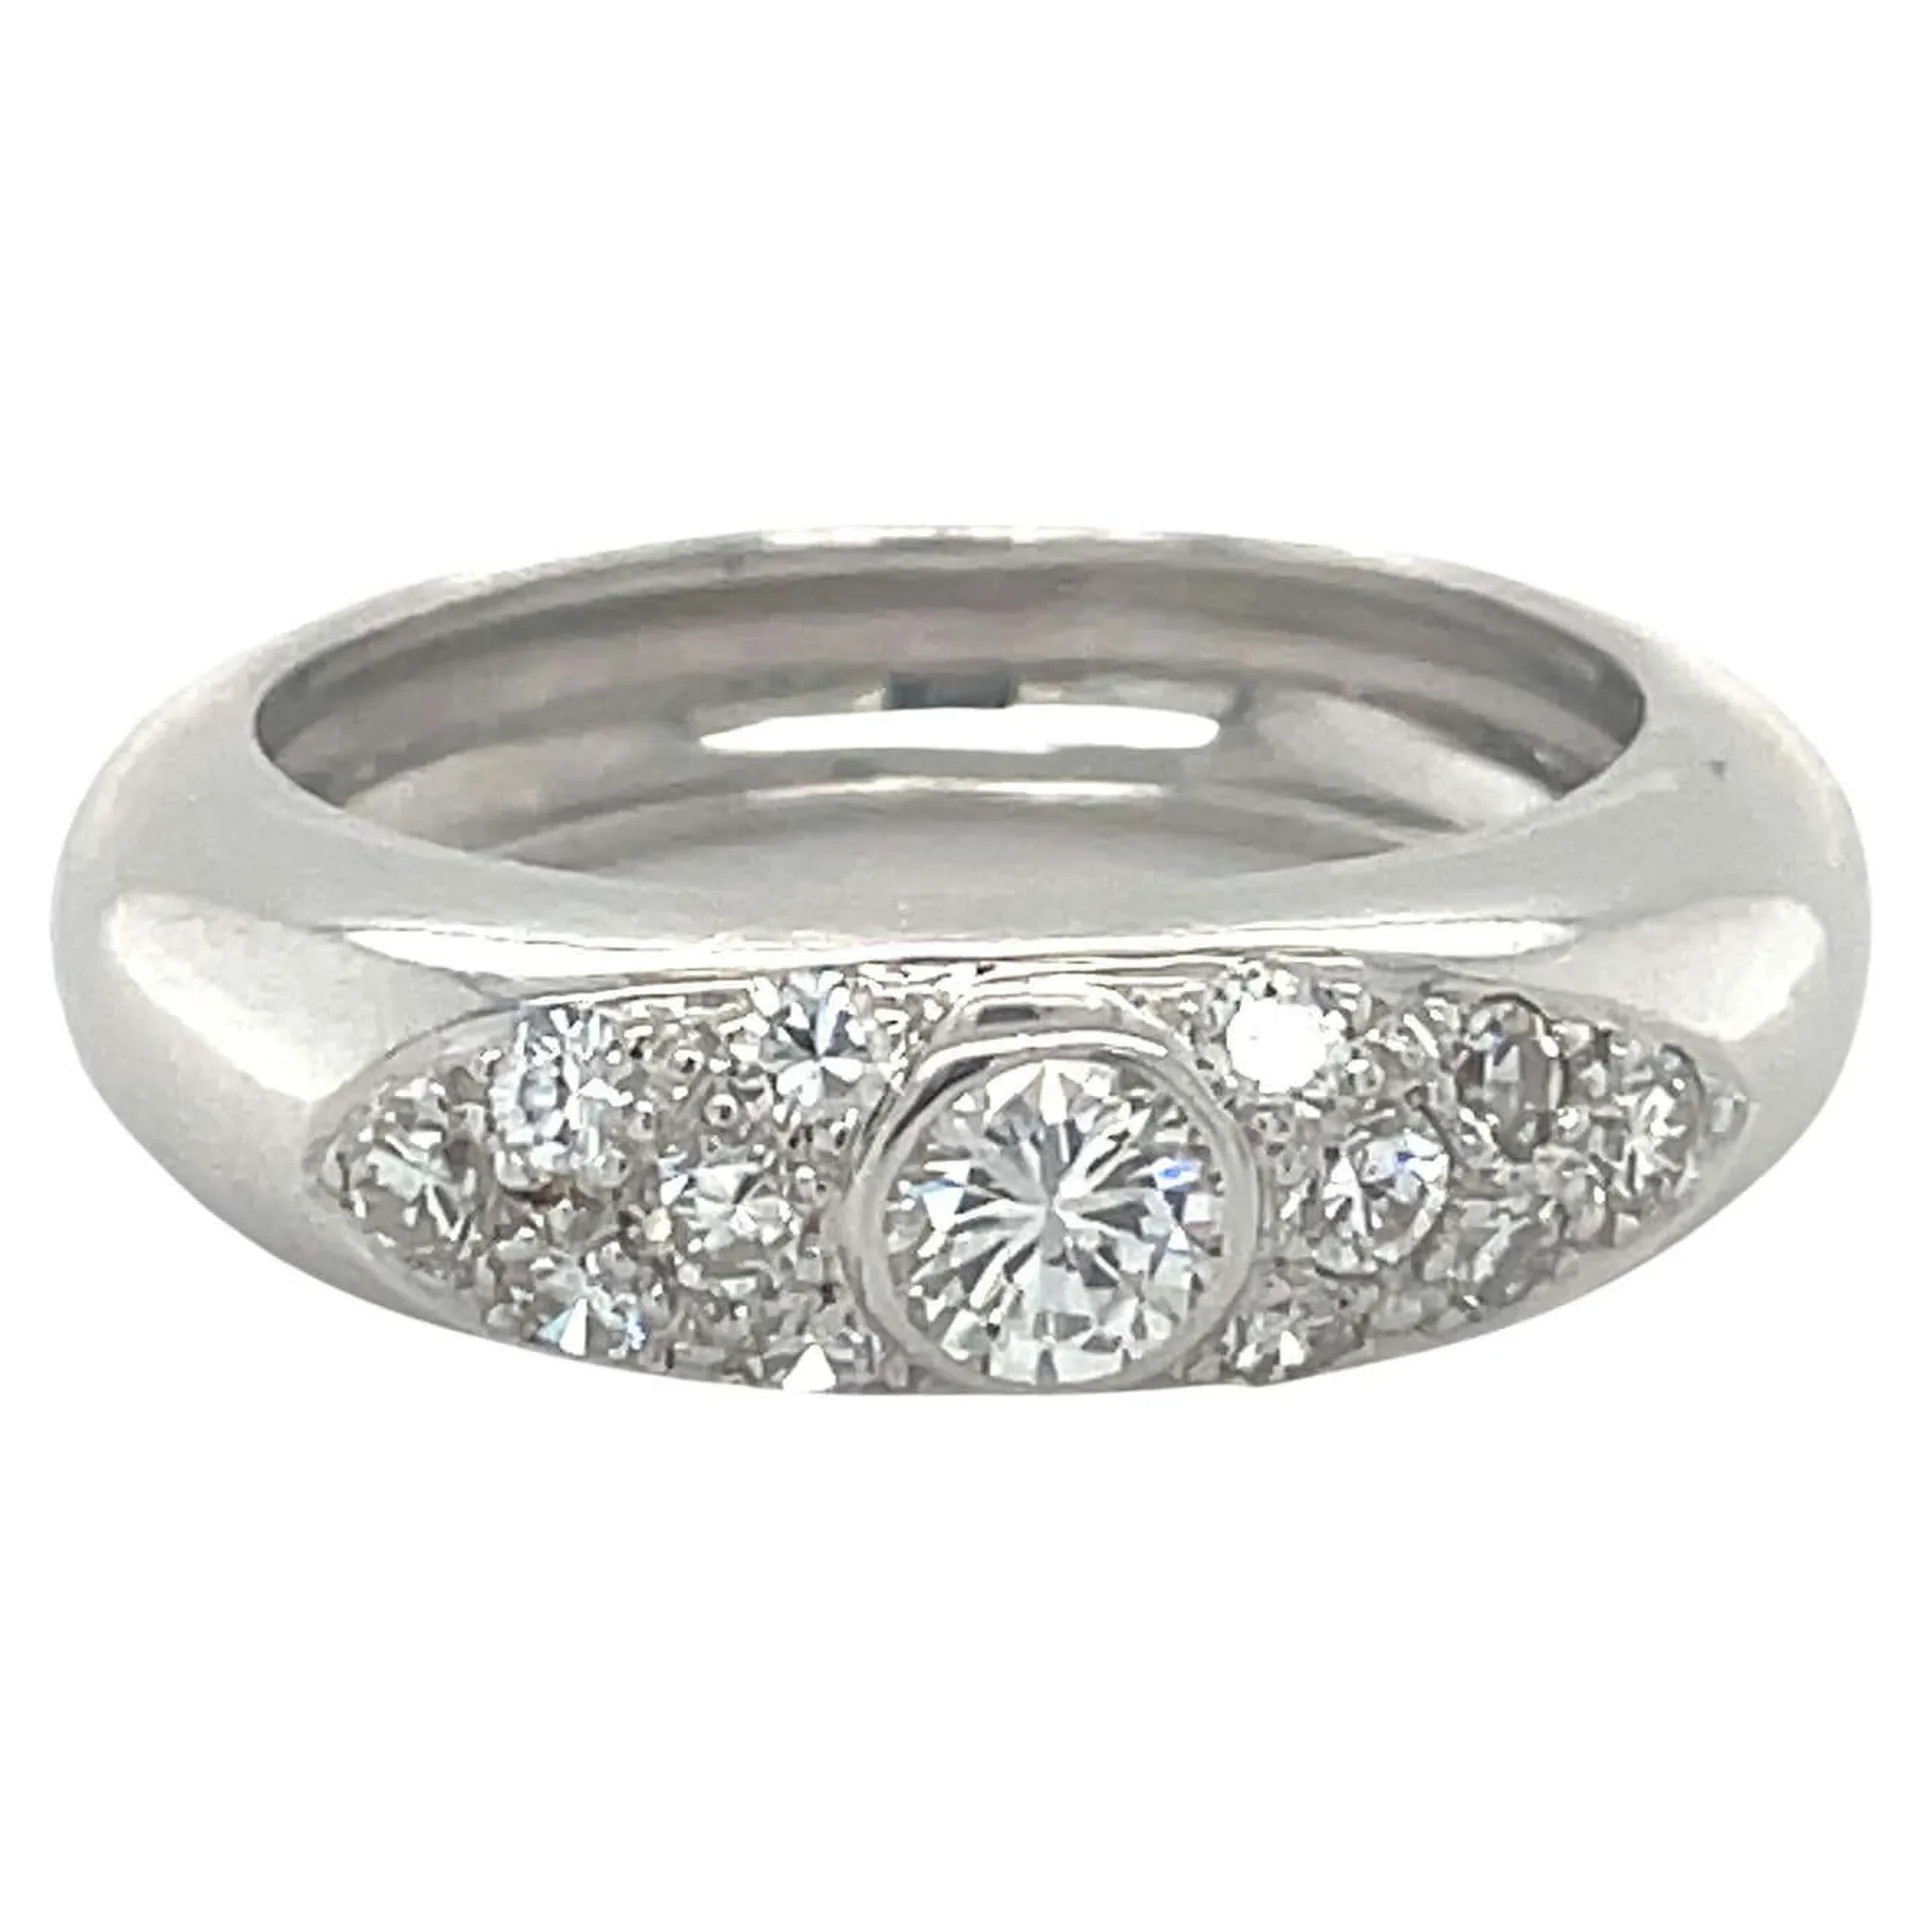 Engagement Diamond Ring, 0.50 Carat Round Natural Diamond, Solid 18k White Gold